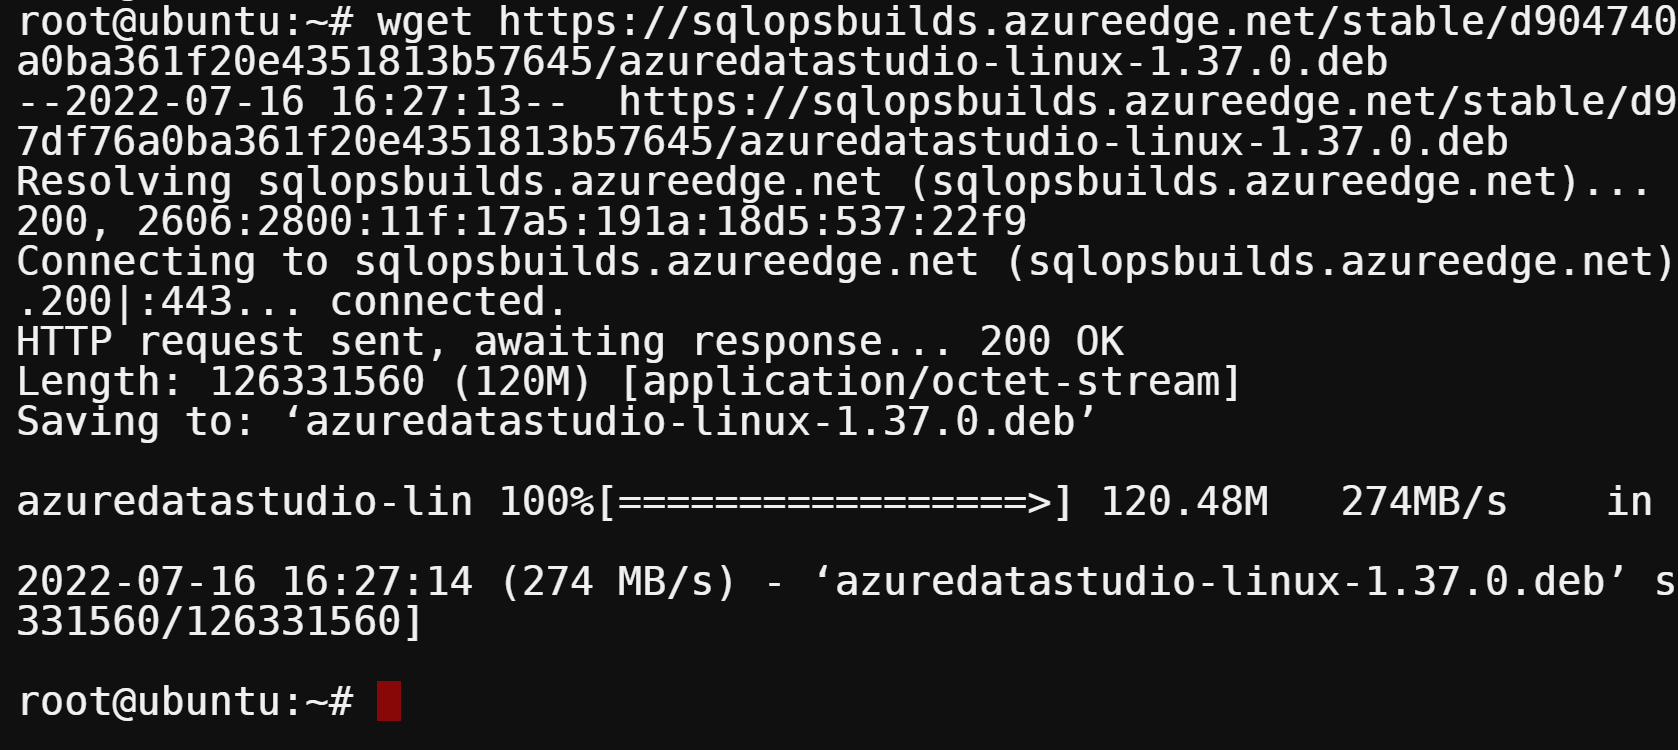 Downloading Azure Data Studio's .deb file